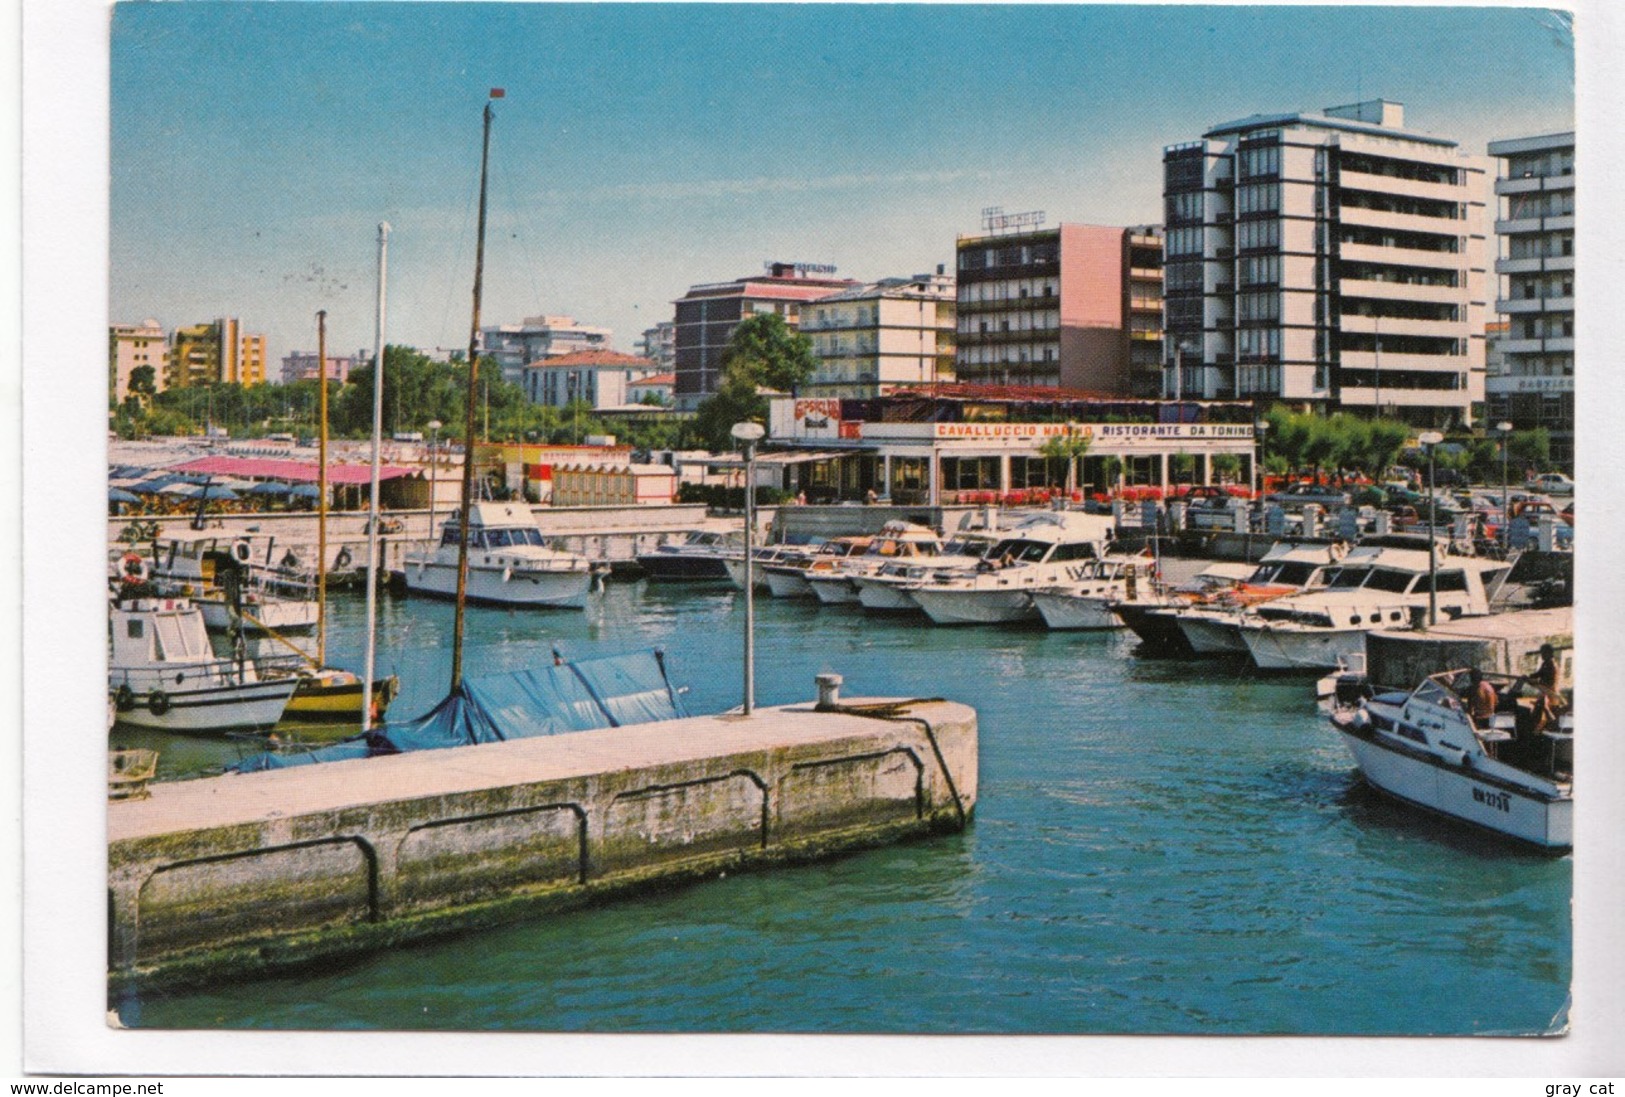 RICCIONE, Darsena E Alberghi, Docks And Hotels, Italy, 1981 Used Postcard [22368] - Rimini